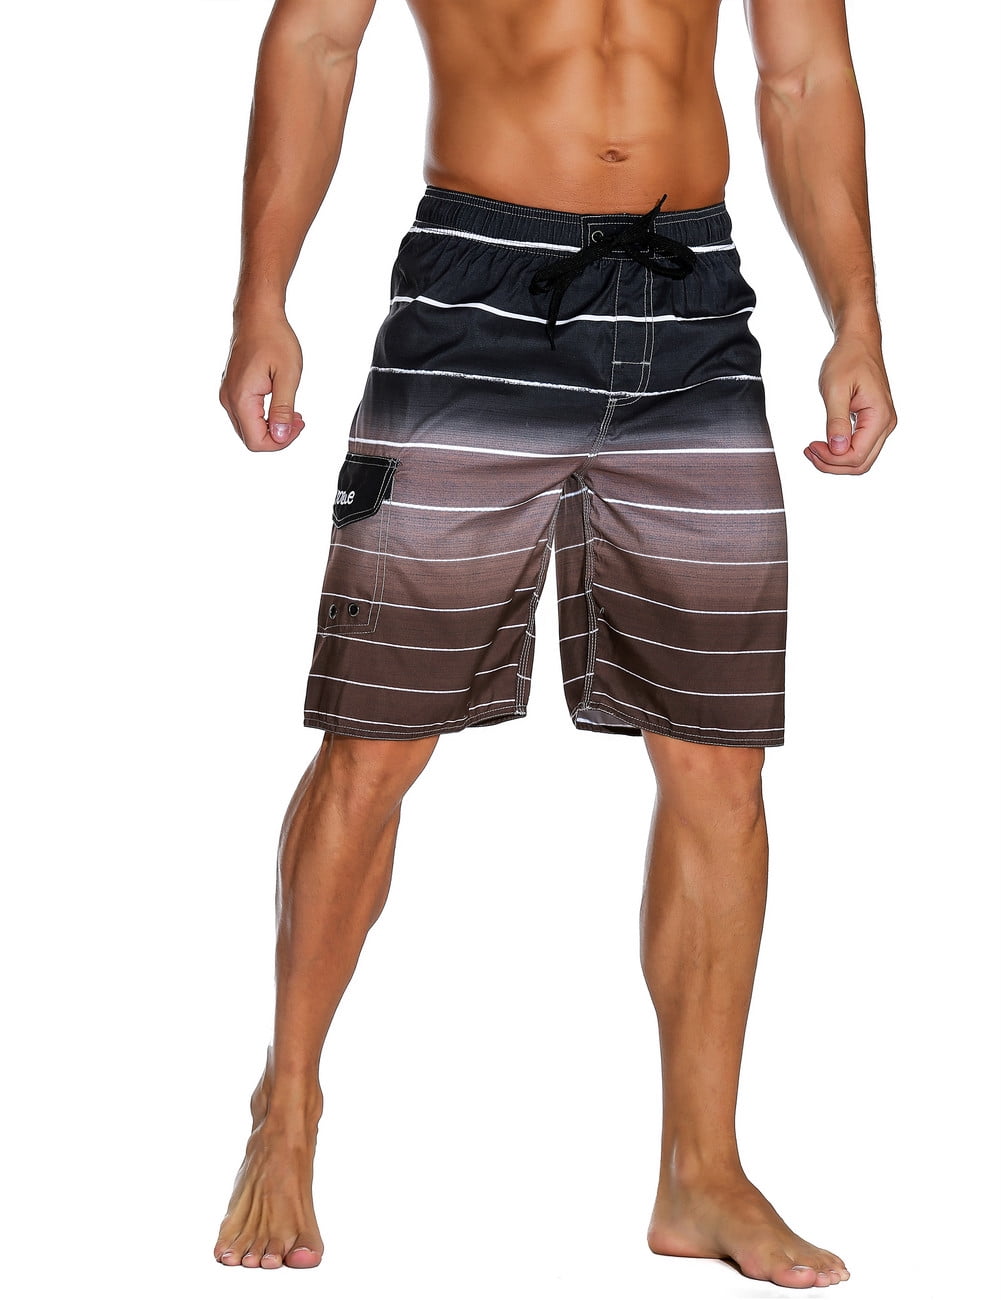 Nonwe Mens Beachwear Summer Holiday Swim Trunks Quick Dry Striped